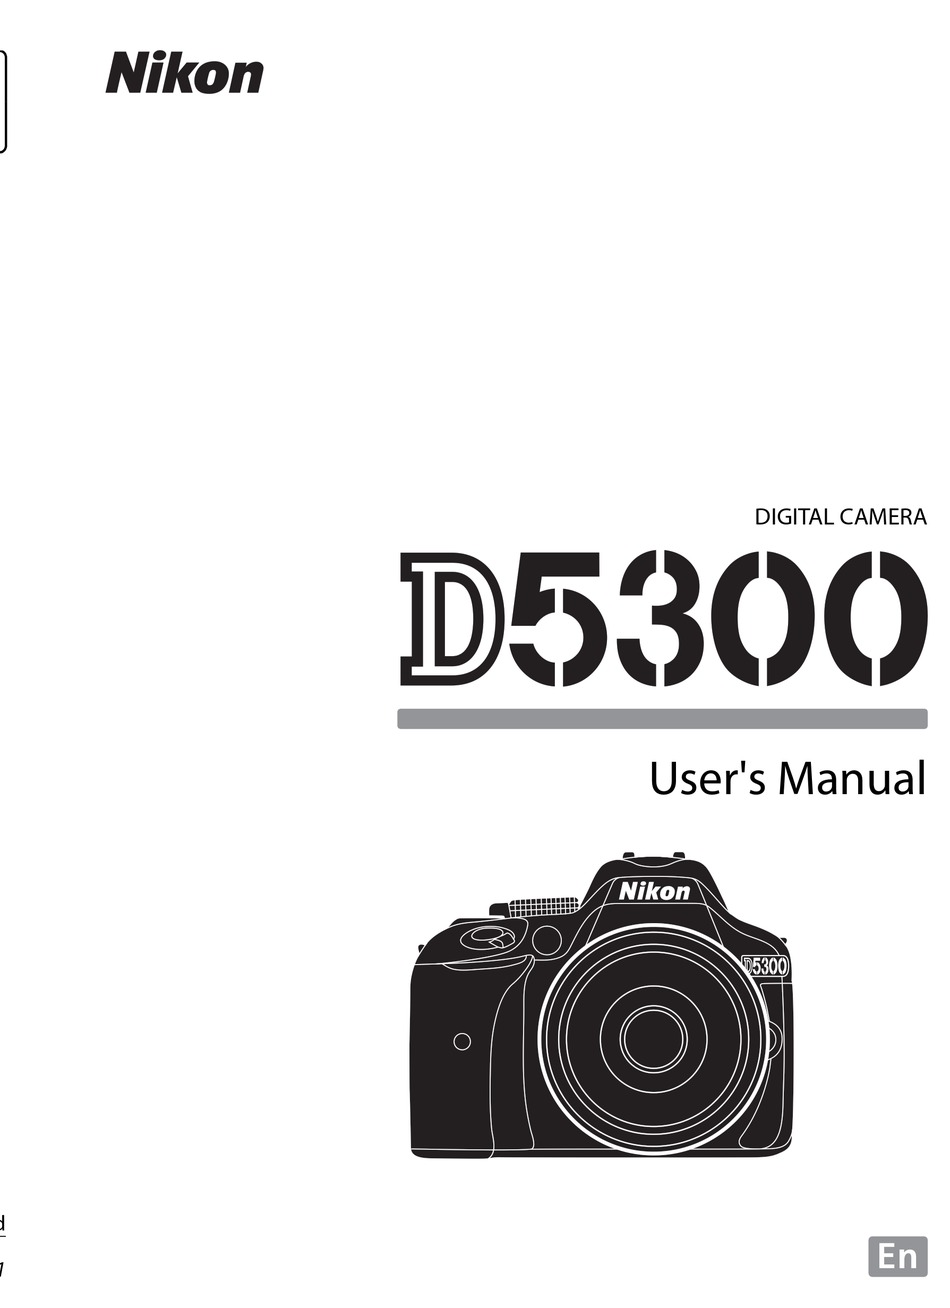 NIKON D5300 USER MANUAL Pdf Download | ManualsLib